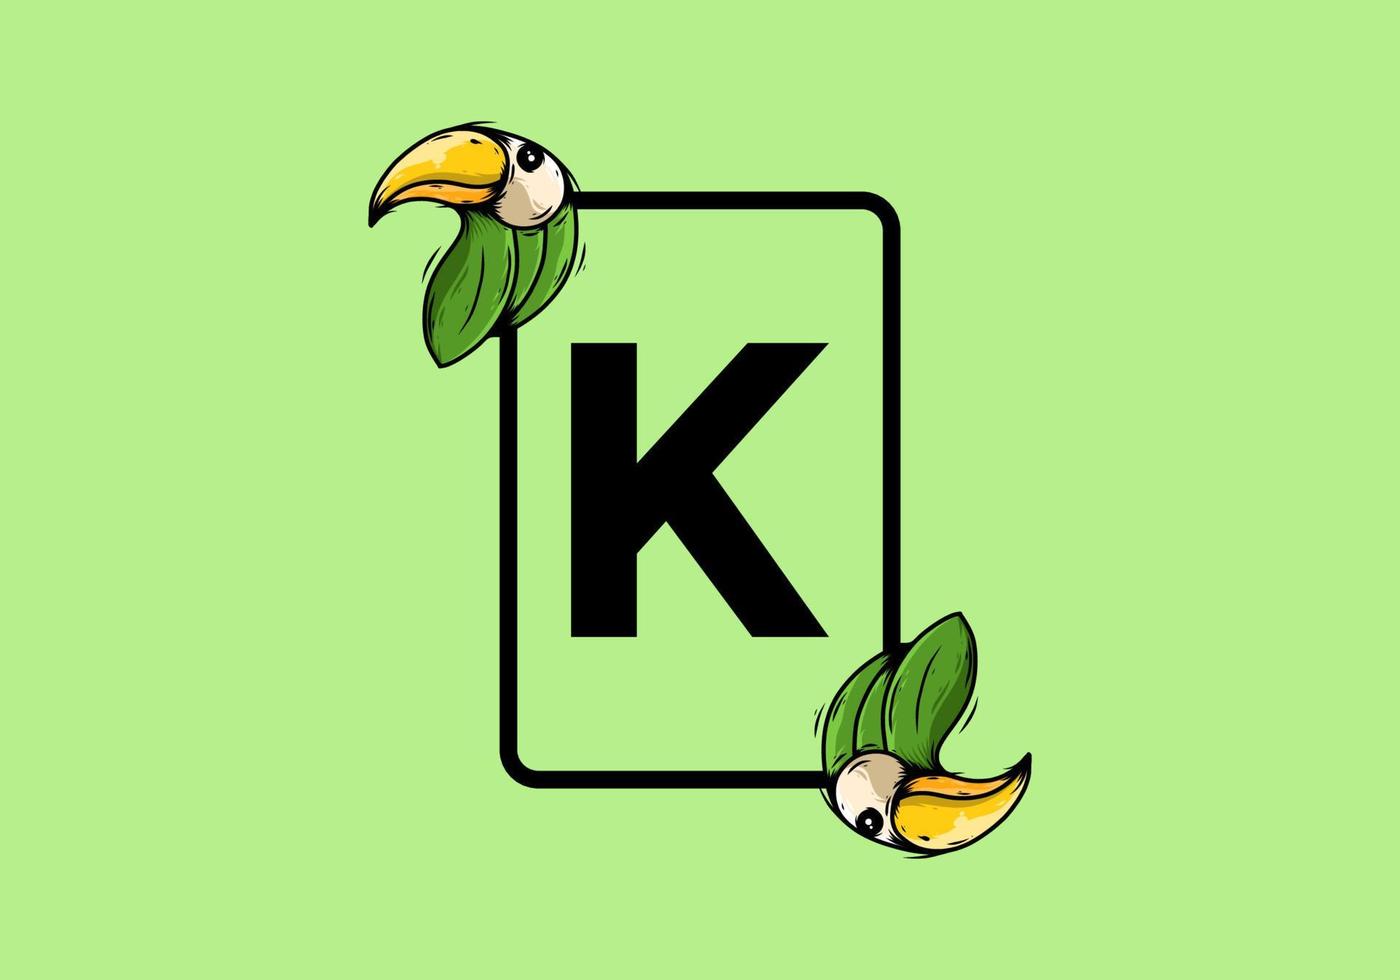 grüner vogel mit k anfangsbuchstaben vektor